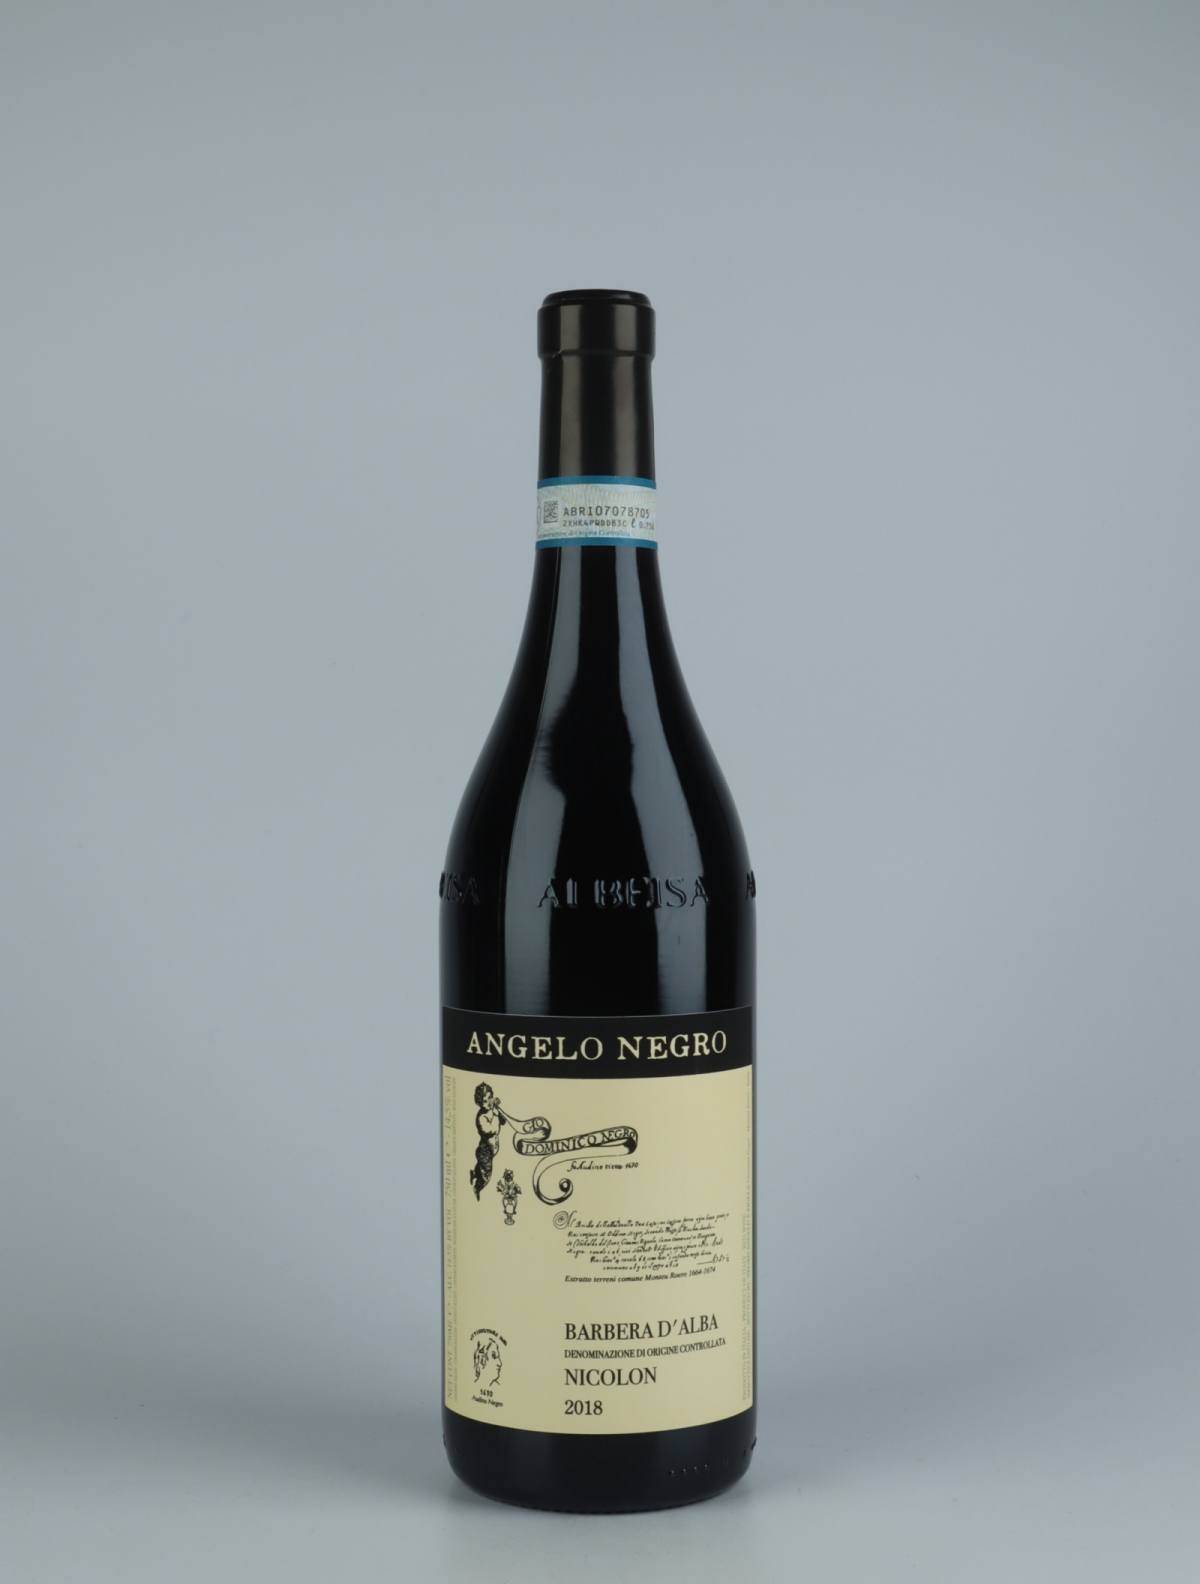 En flaske 2018 Barbera d'Alba - Nicolon Rødvin fra Angelo Negro, Piemonte i Italien